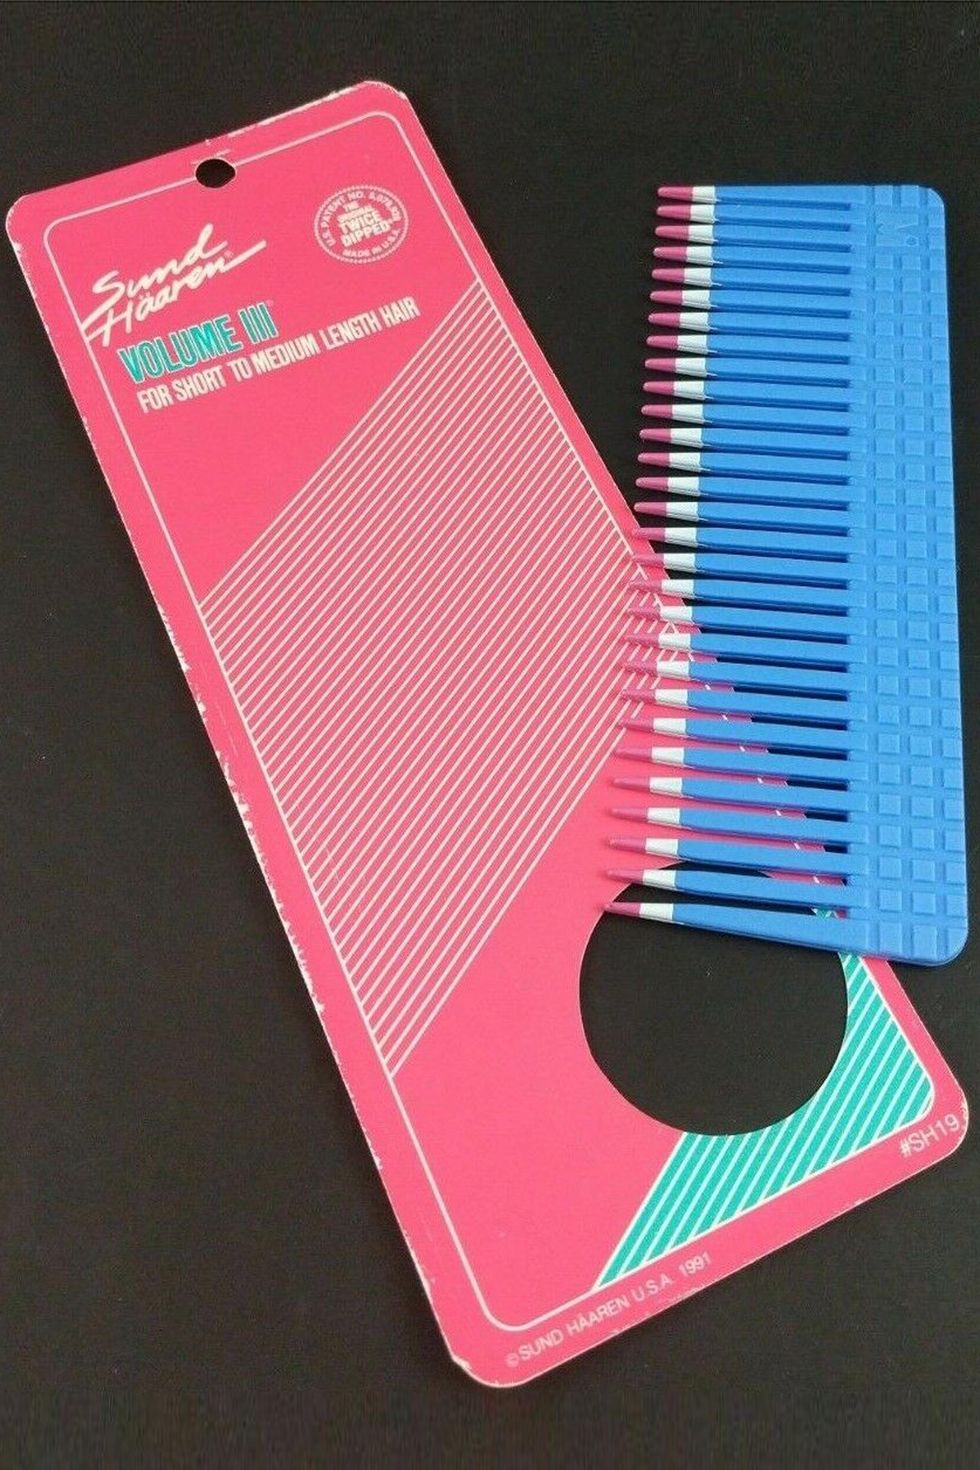 90s hair tools